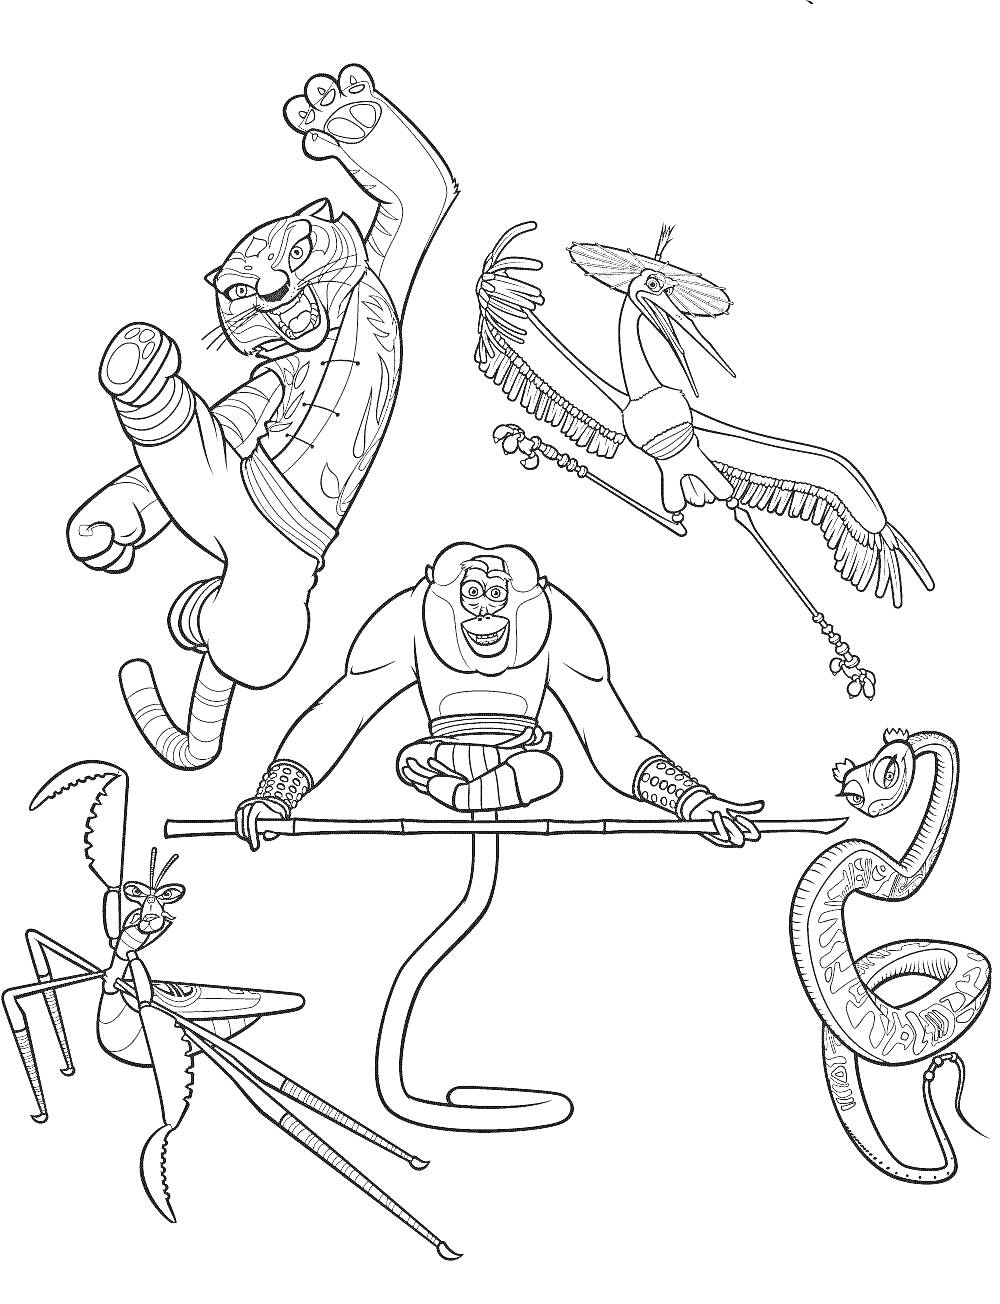 Раскраска Боевая команда животных: тигр, журавль, богомол, обезьяна, змея